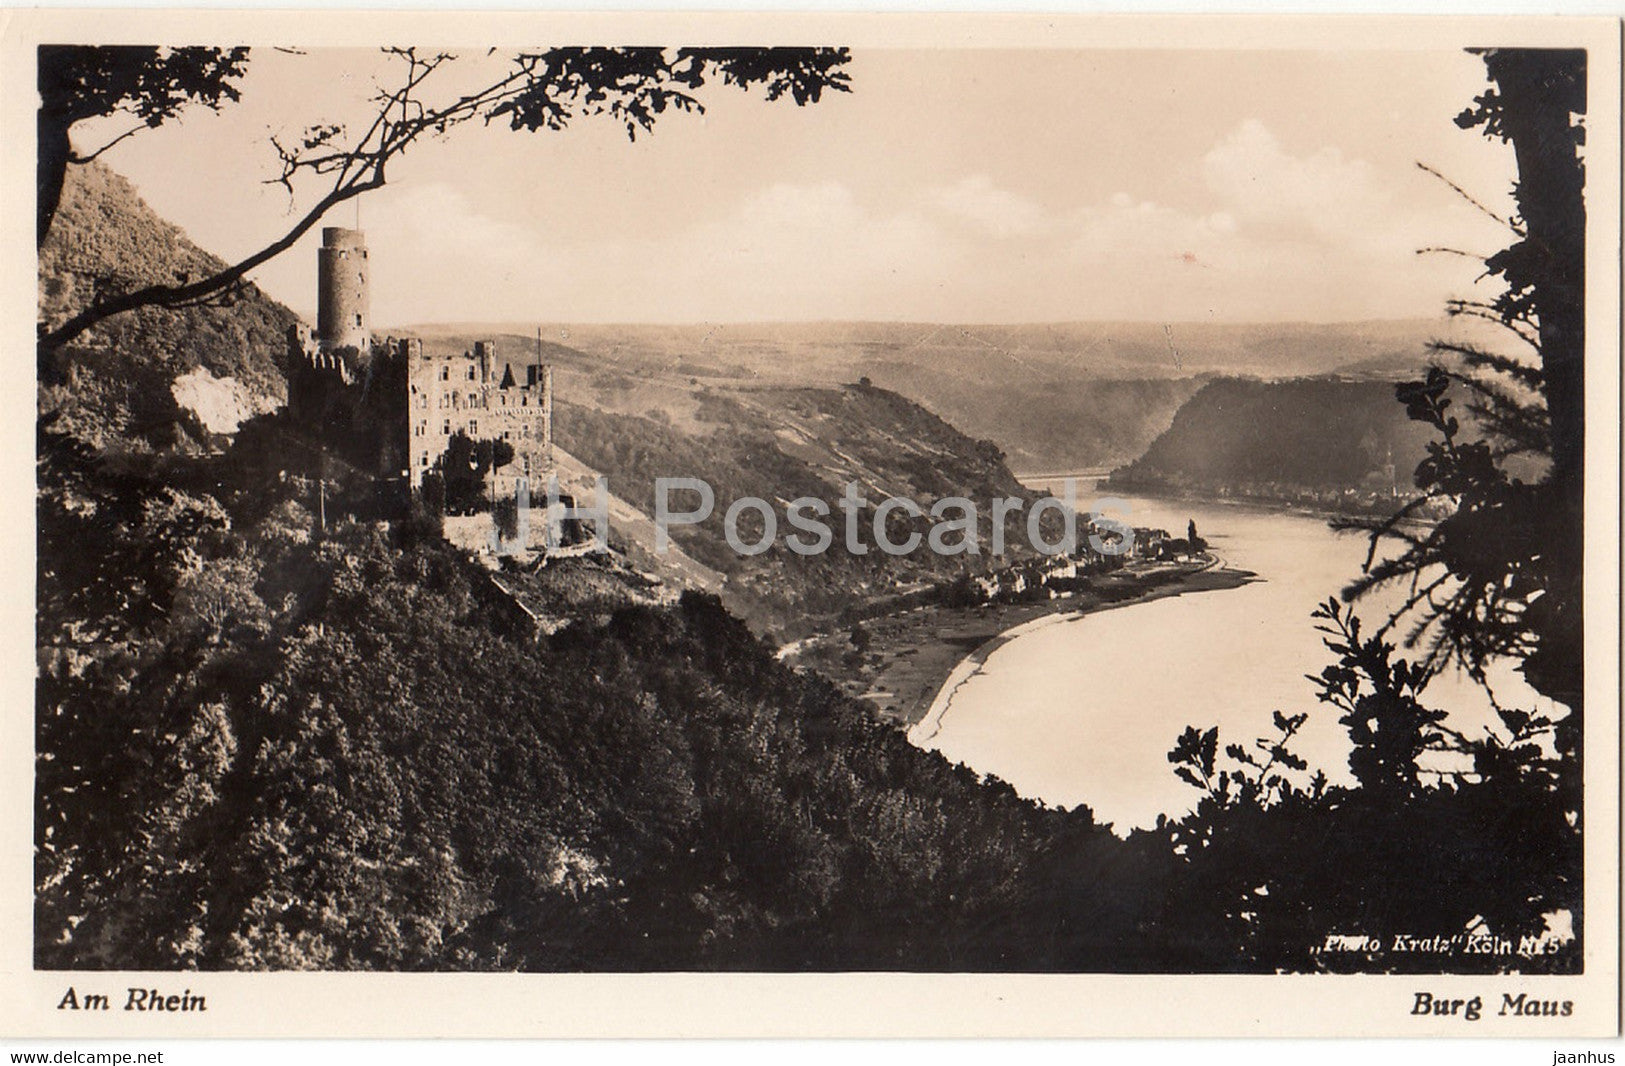 Am Rhein - Burg Maus - old postcard - Germany - unused - JH Postcards